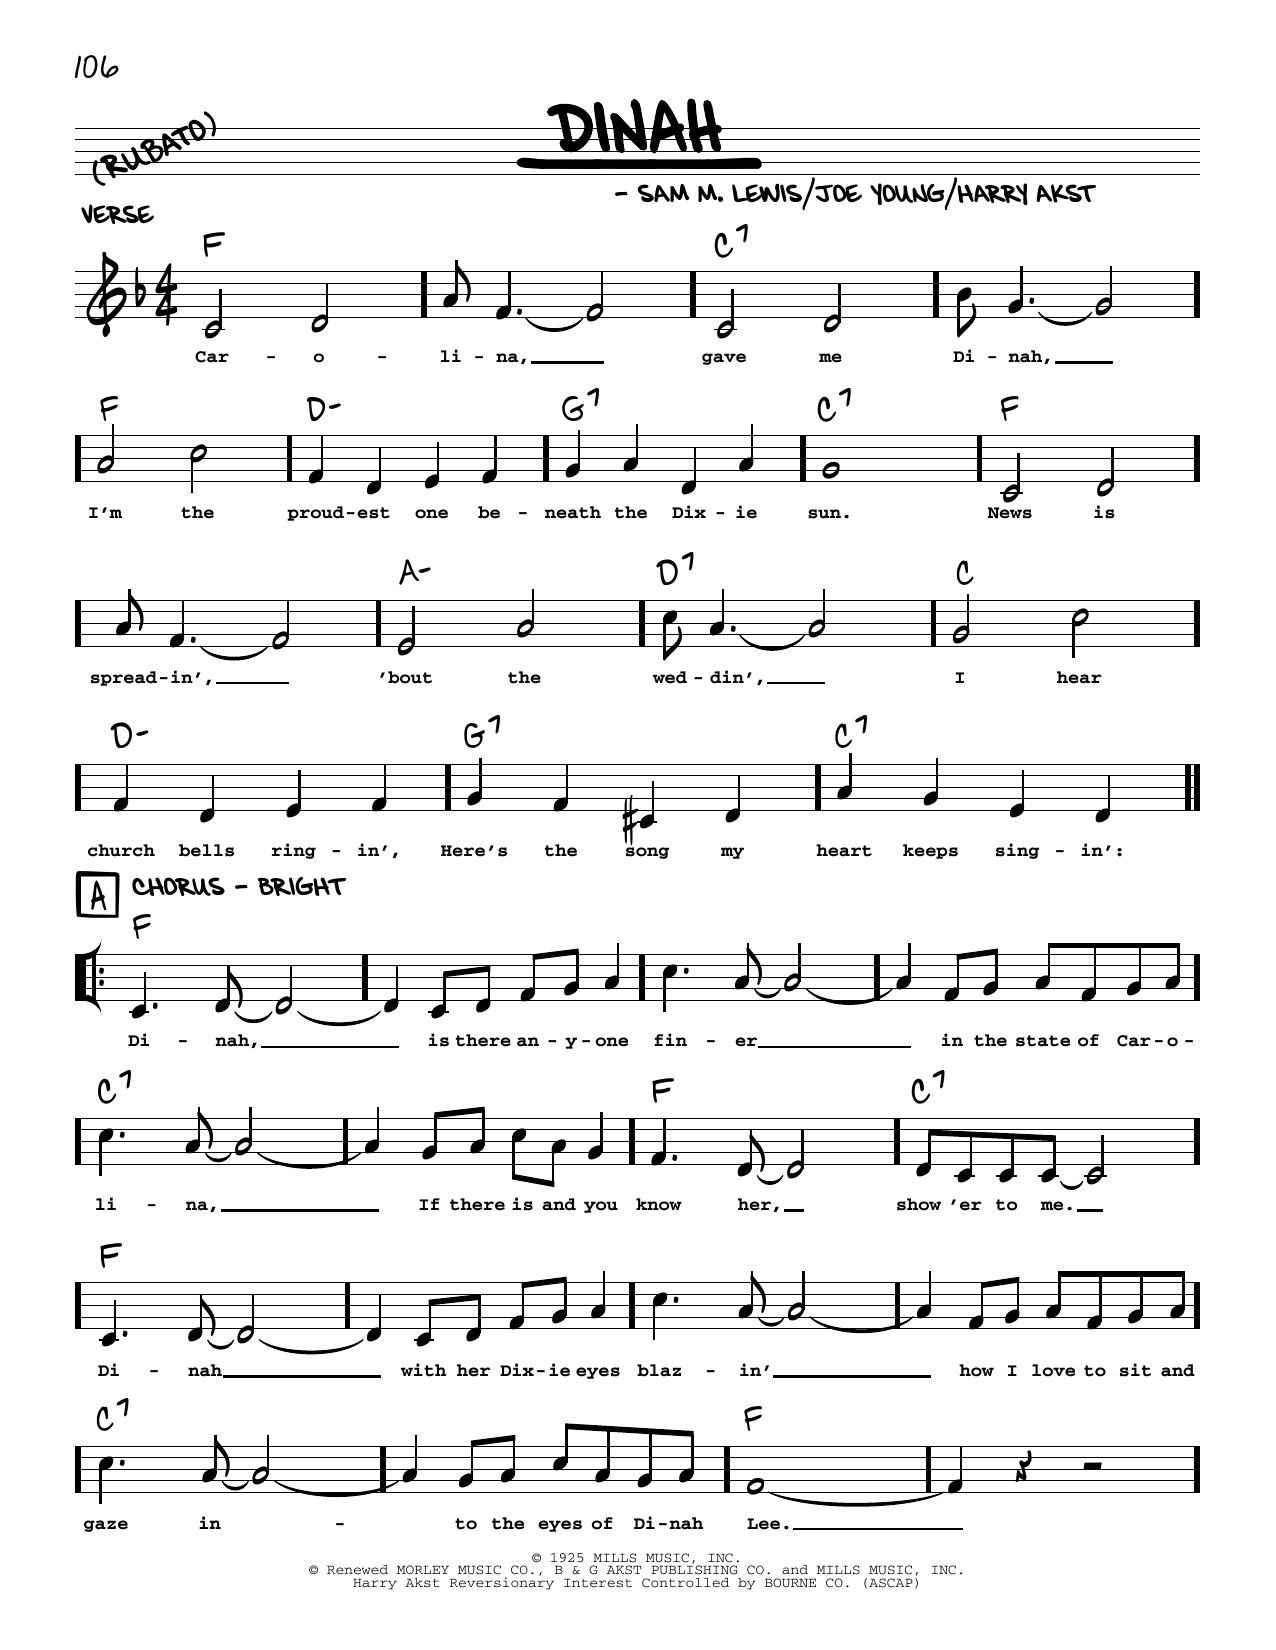 Sam M. Lewis Dinah (arr. Robert Rawlins) Sheet Music Notes & Chords for Real Book – Melody, Lyrics & Chords - Download or Print PDF